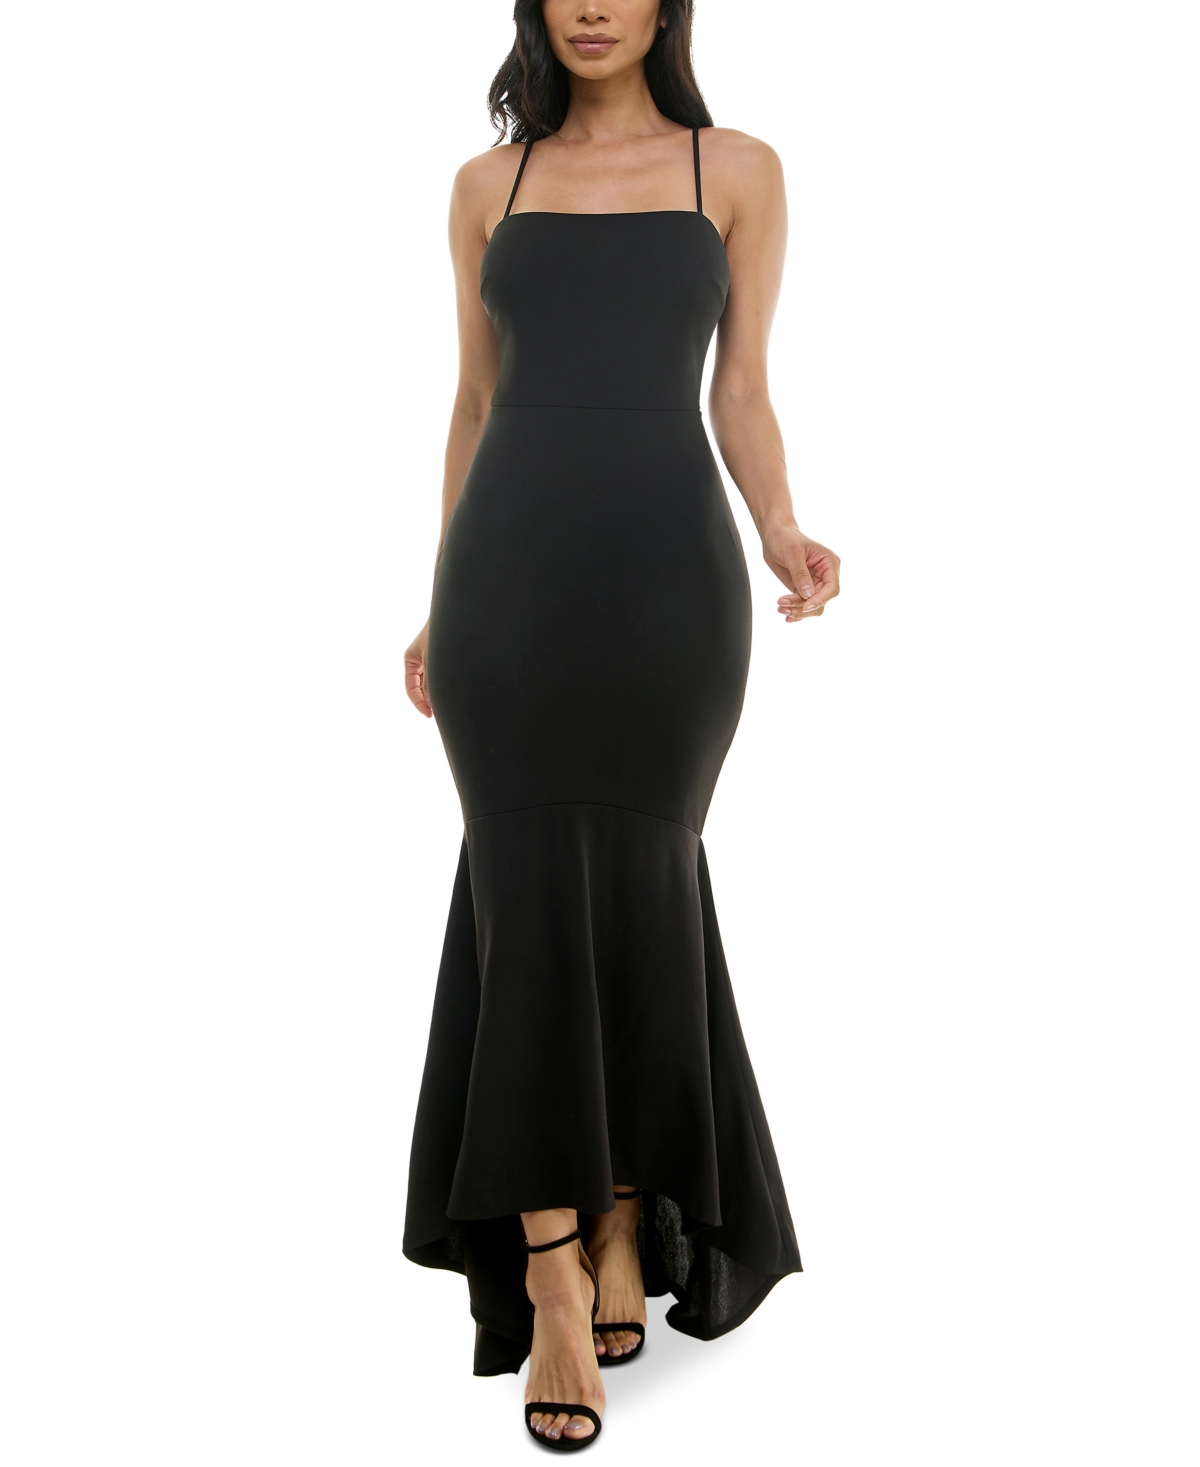 Women's Hi-Low Straight-Neck Mermaid Gown - Black